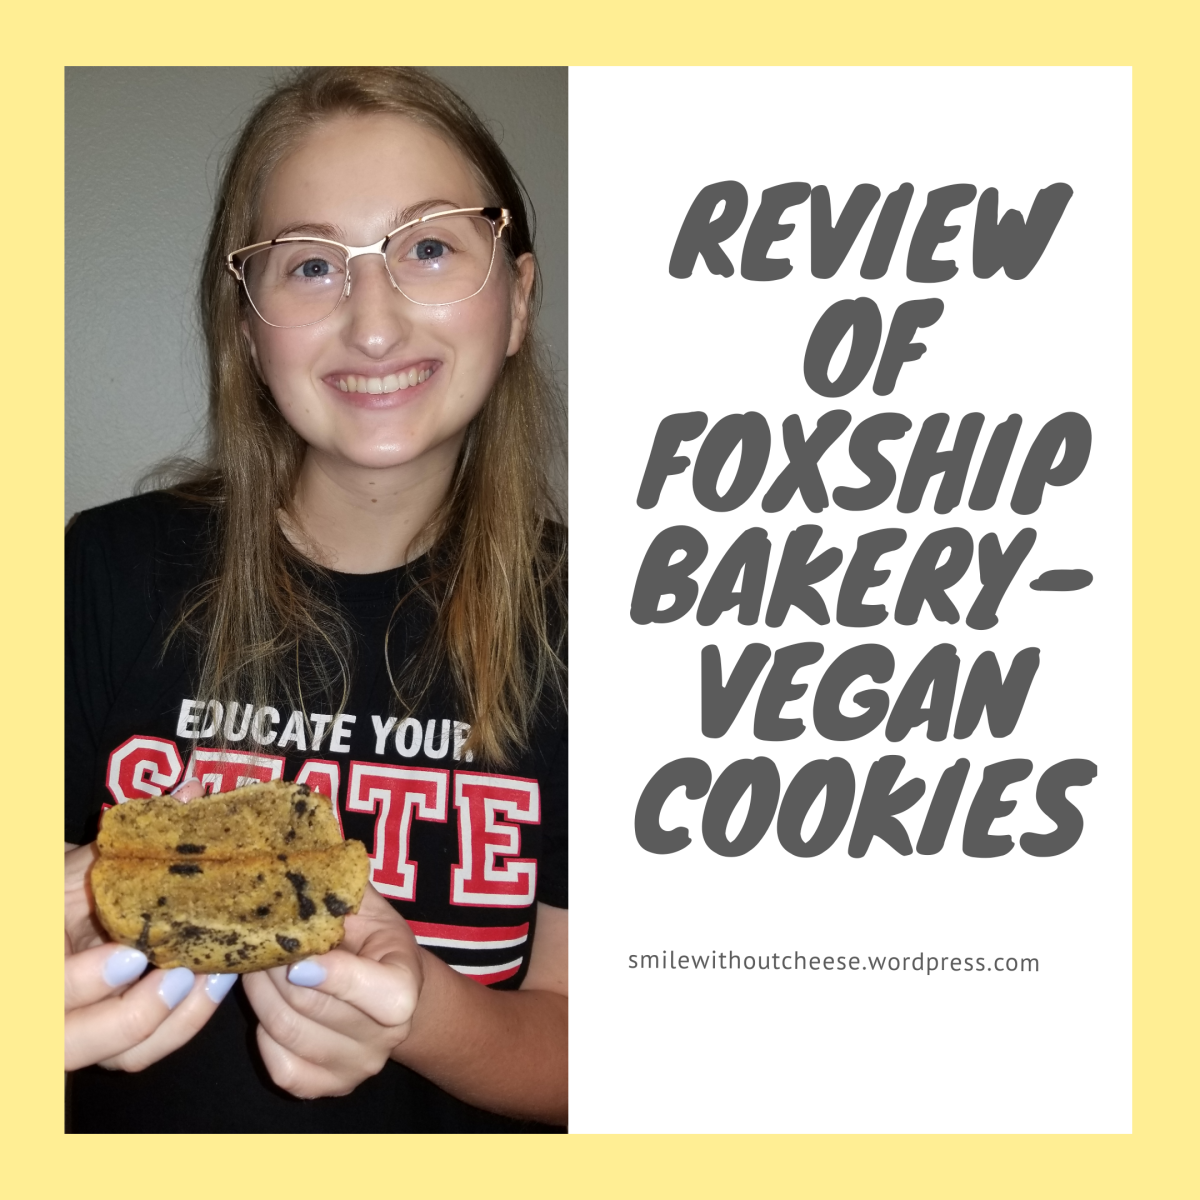 Review of Foxship Bakery- Vegan Cookies